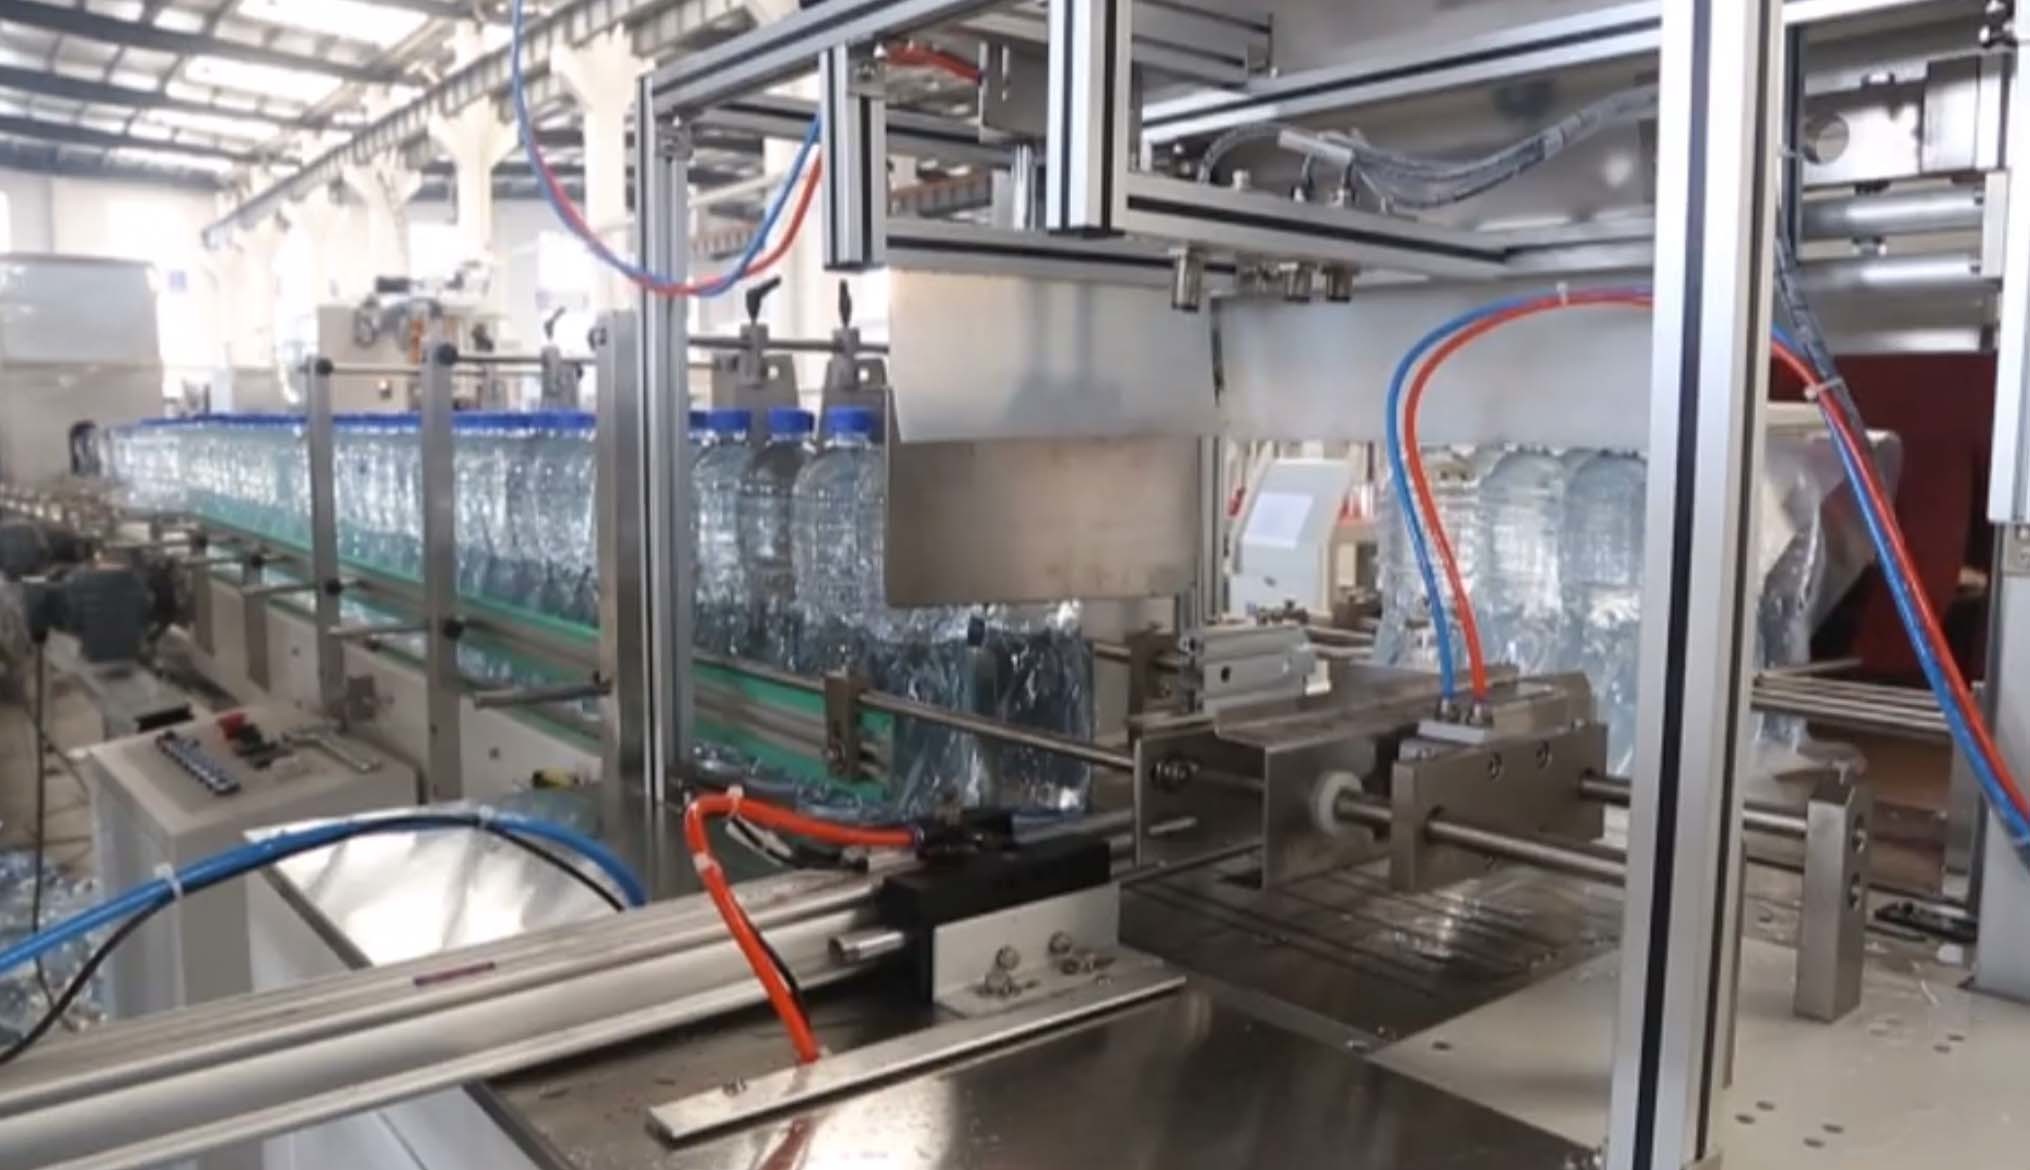 liquid packaging machine - juice packing machine manufacturer 